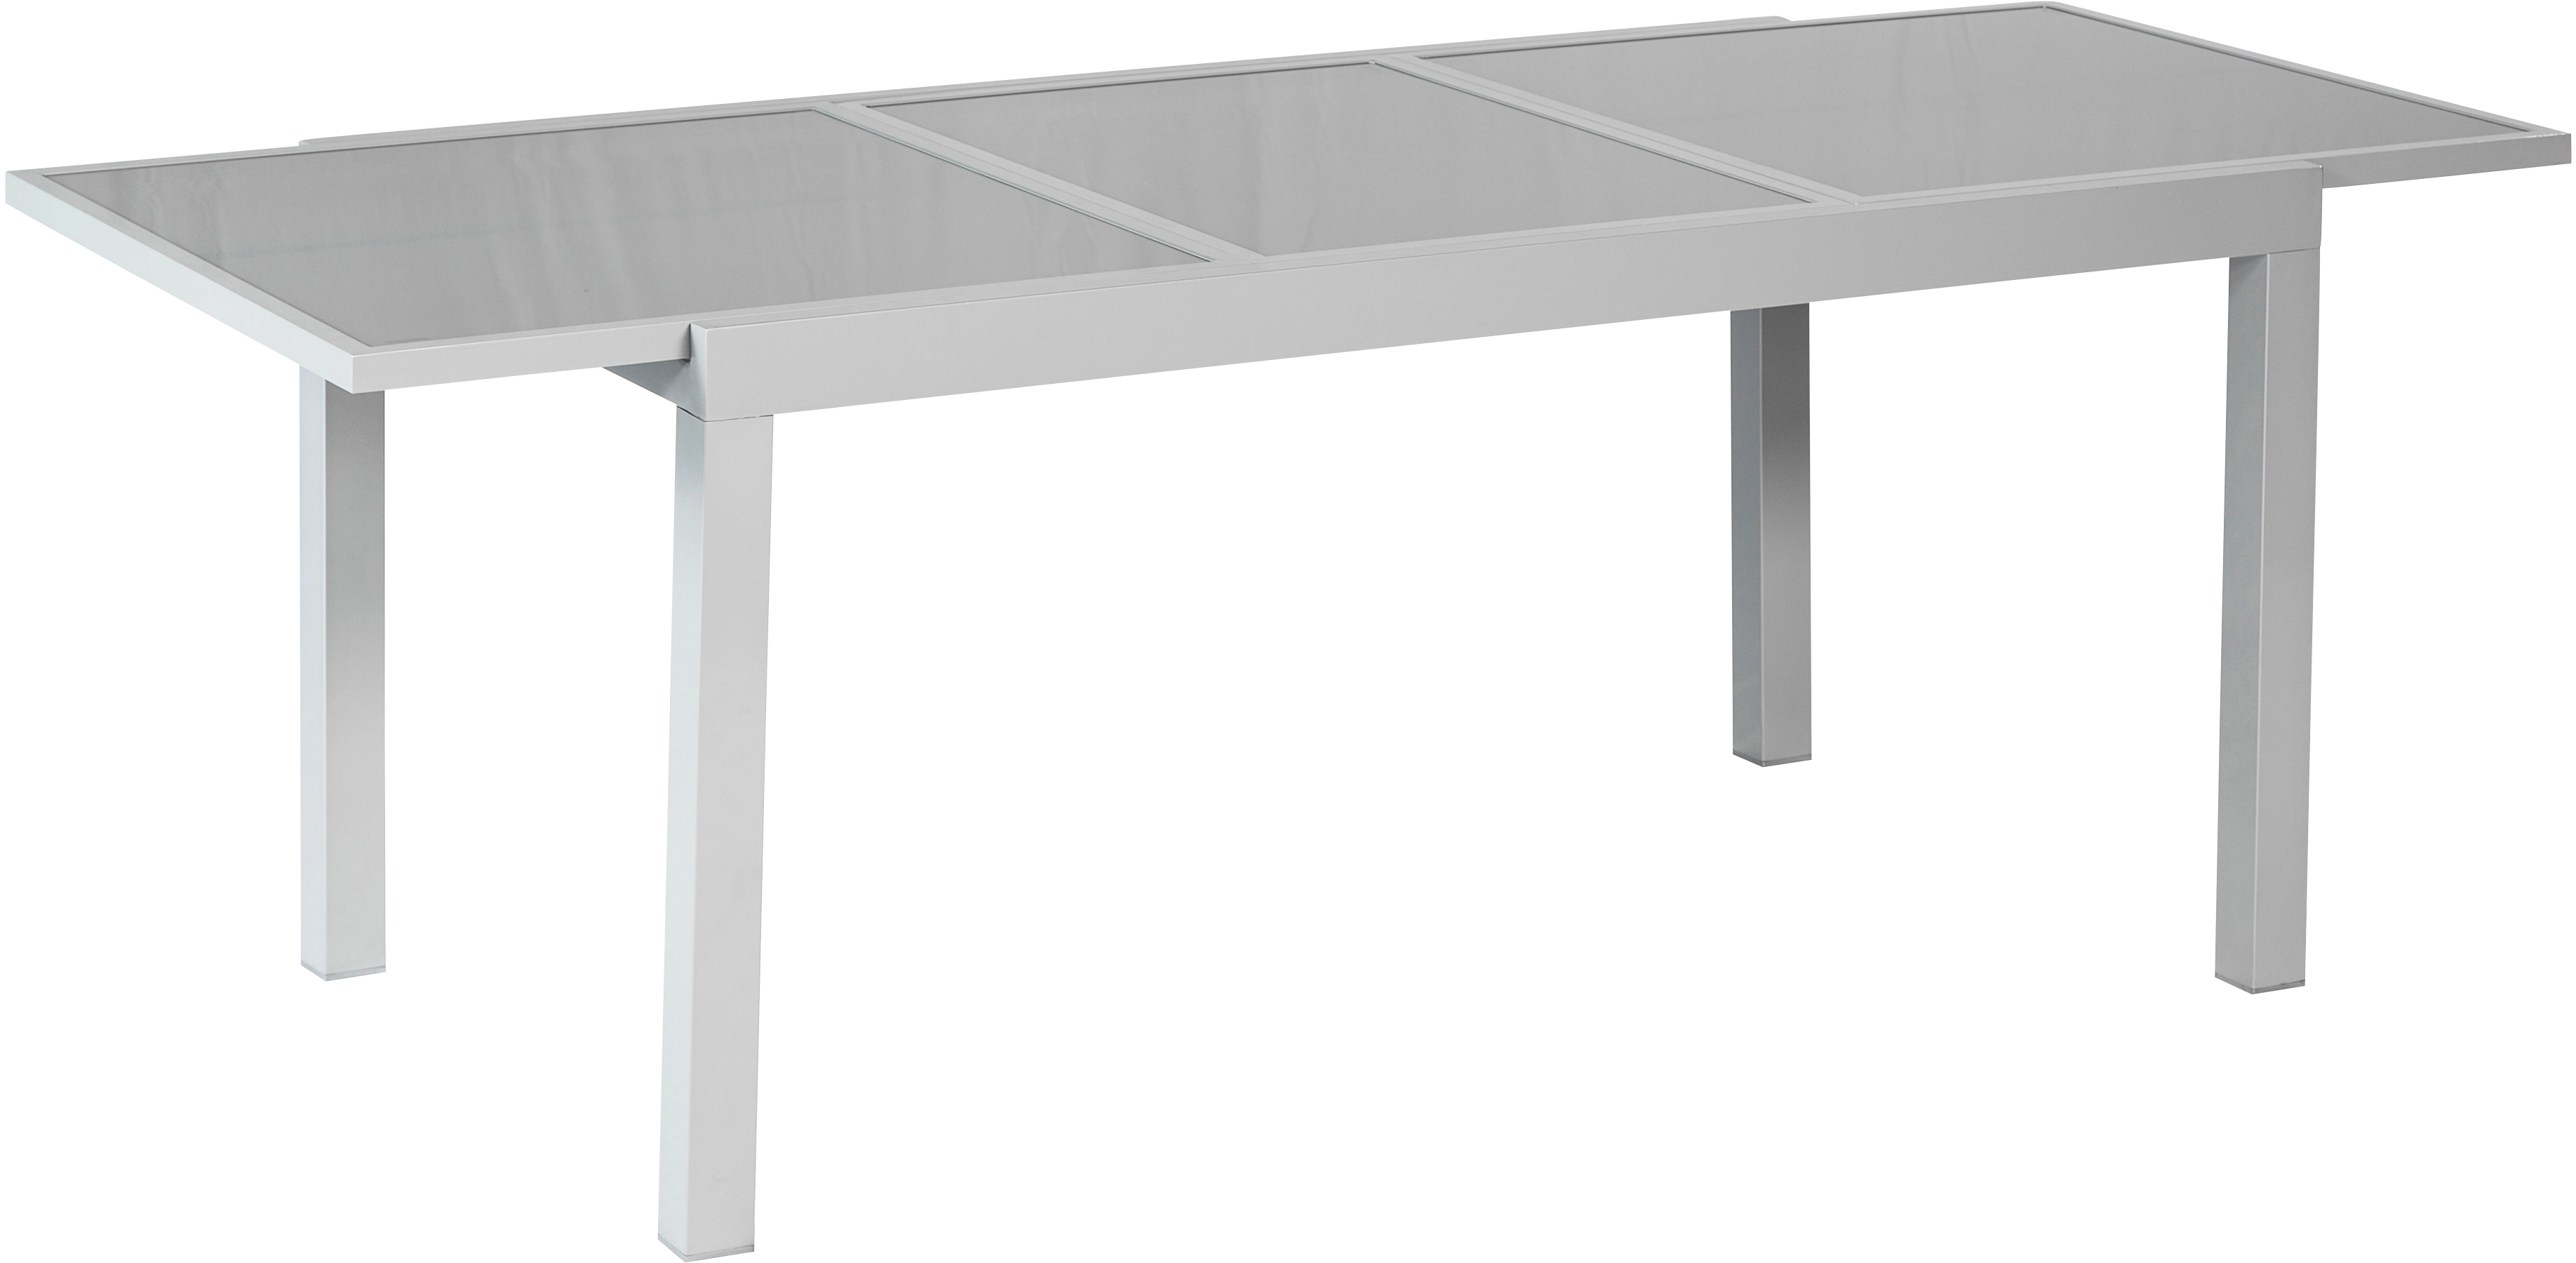 Merxx Gartentisch Rechteckig Aluminium Grau Ausziehbar 140/200 cm x 90 cm